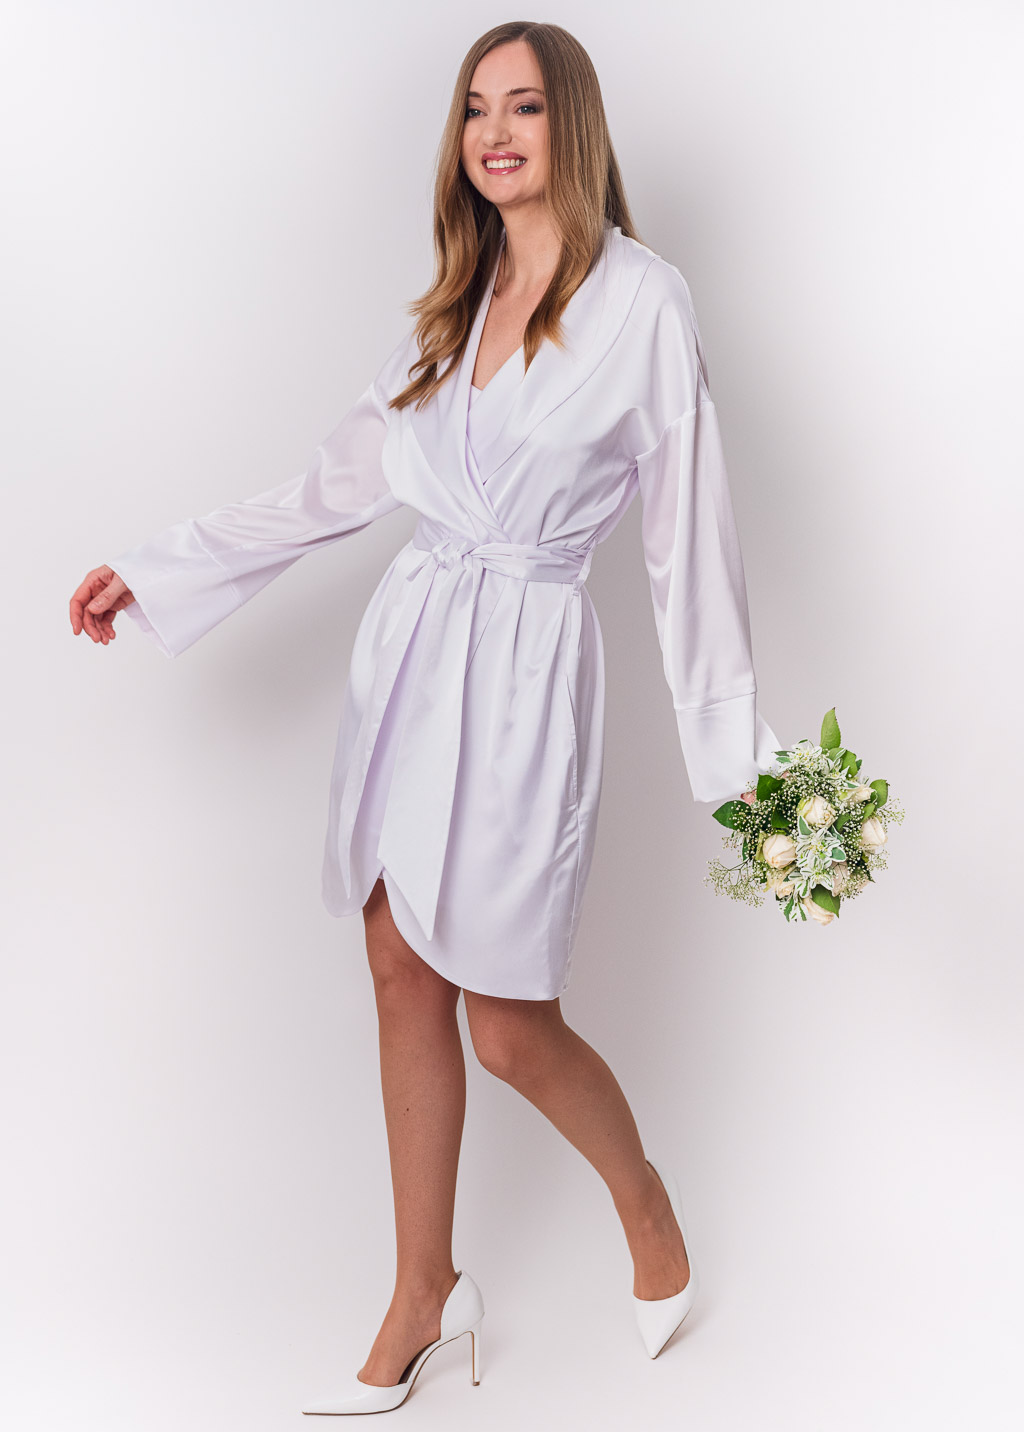 White silk robe with pockets